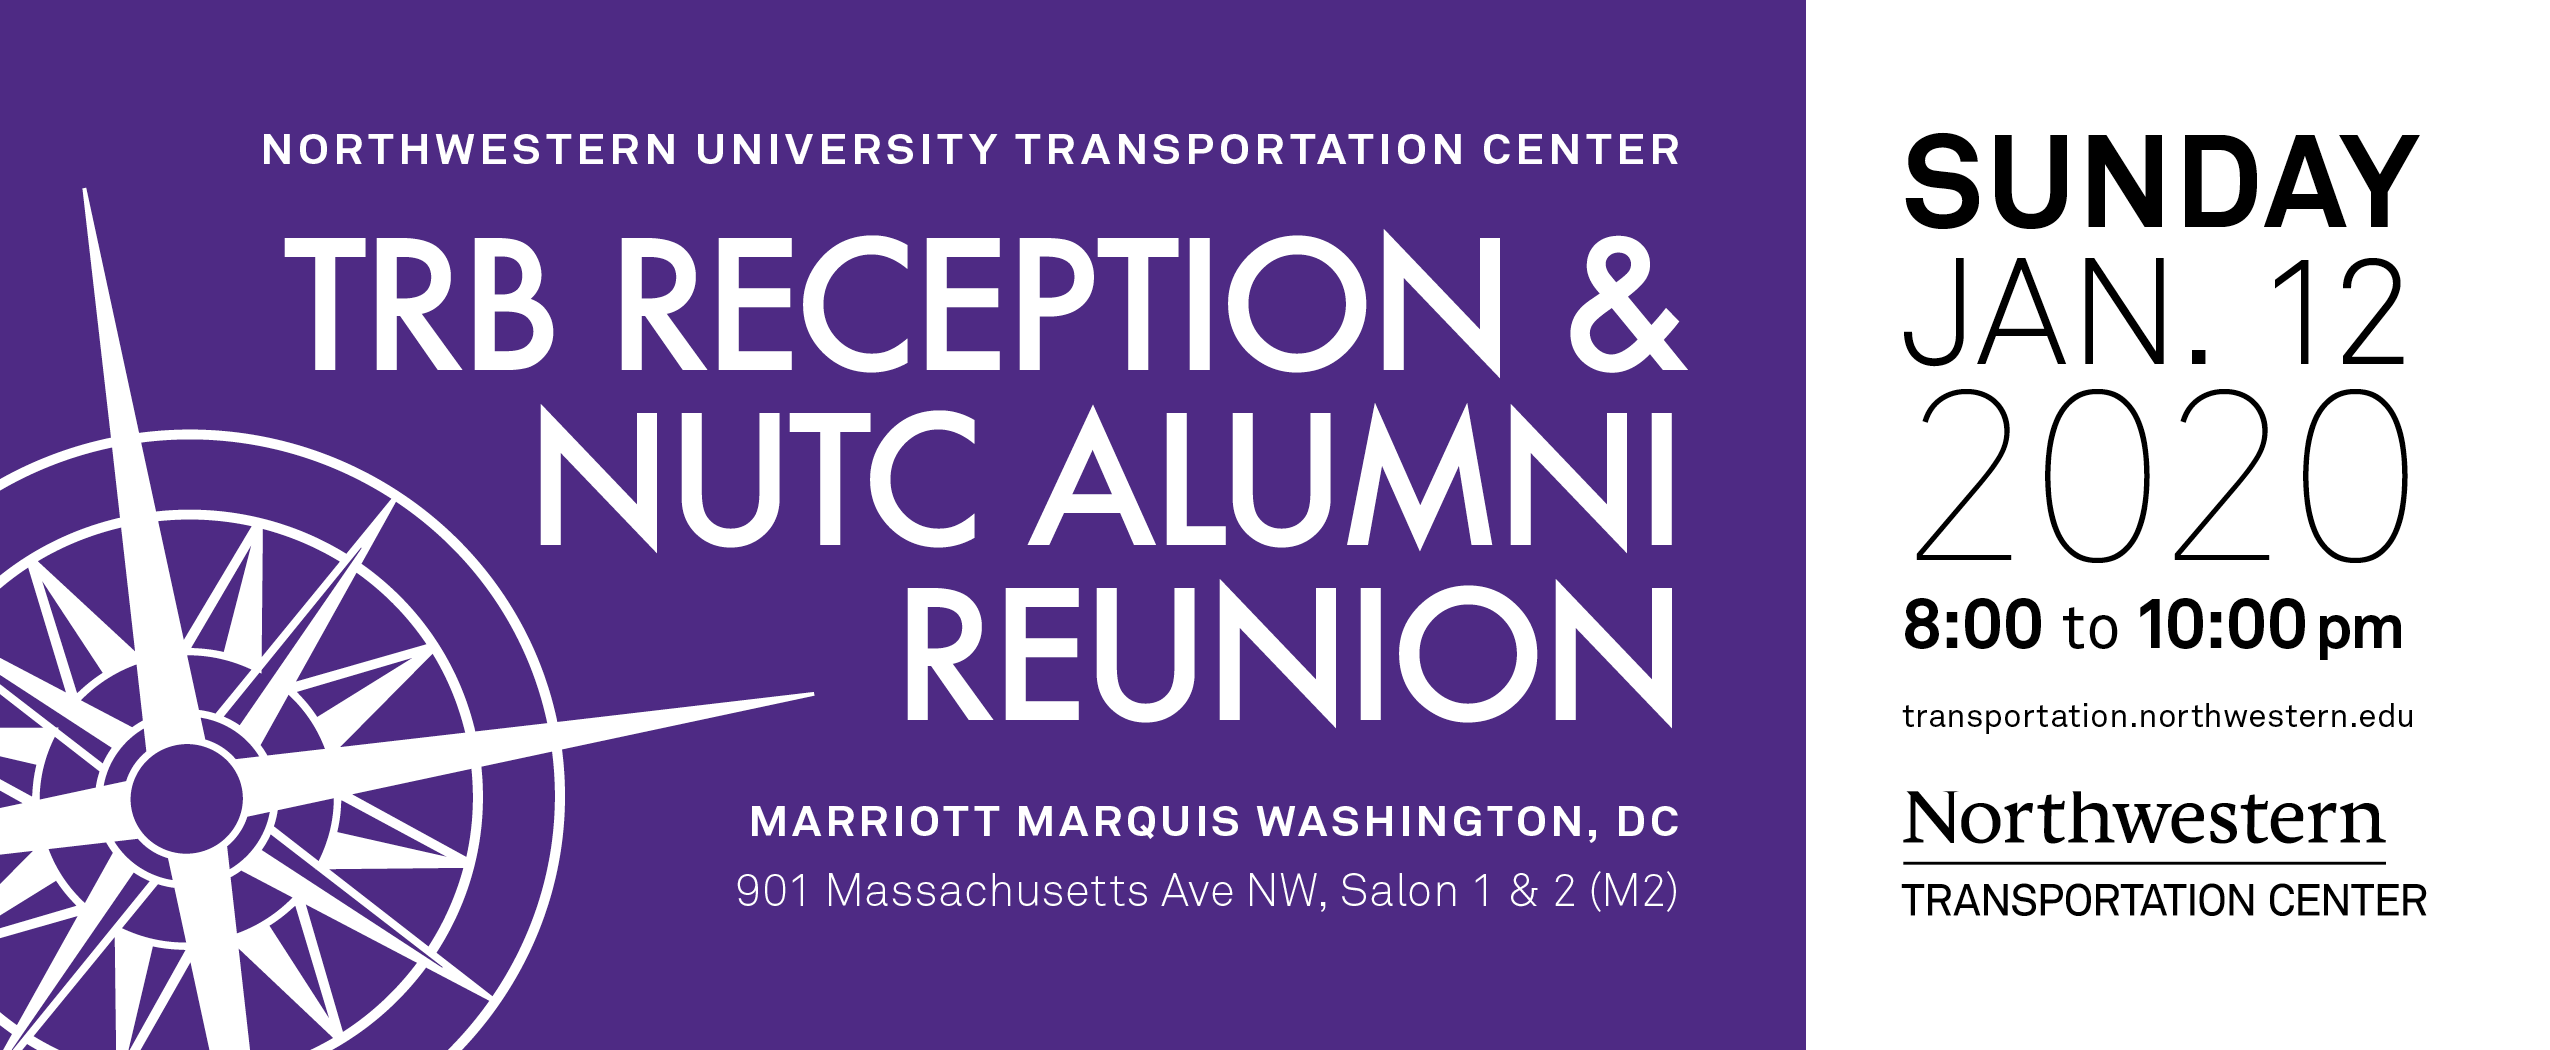 TRB Reception & NUTC Alumni Reunion